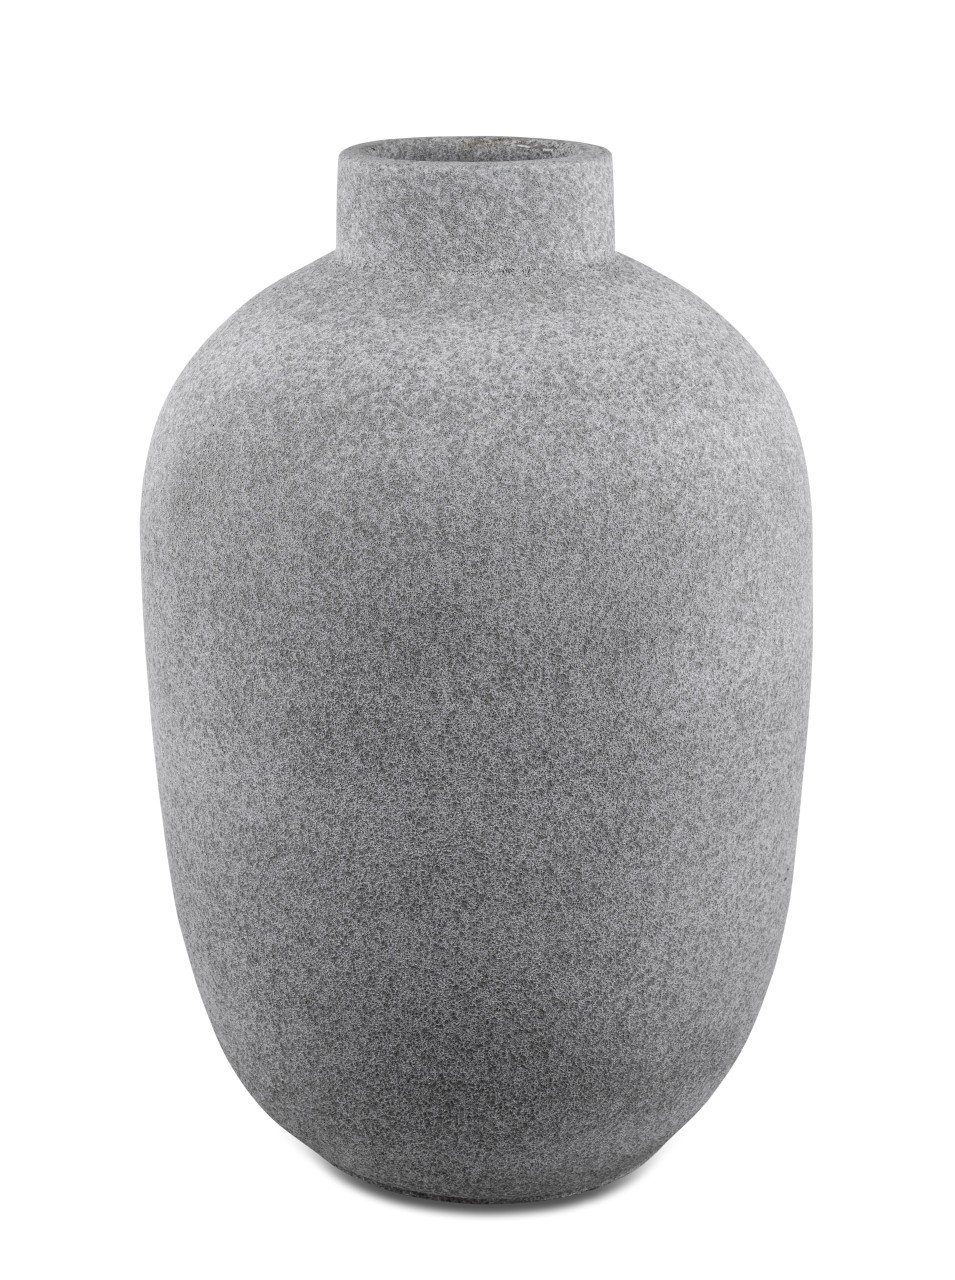 H:40cm Grau Heavy, D:33cm Bodenvase formano Keramik